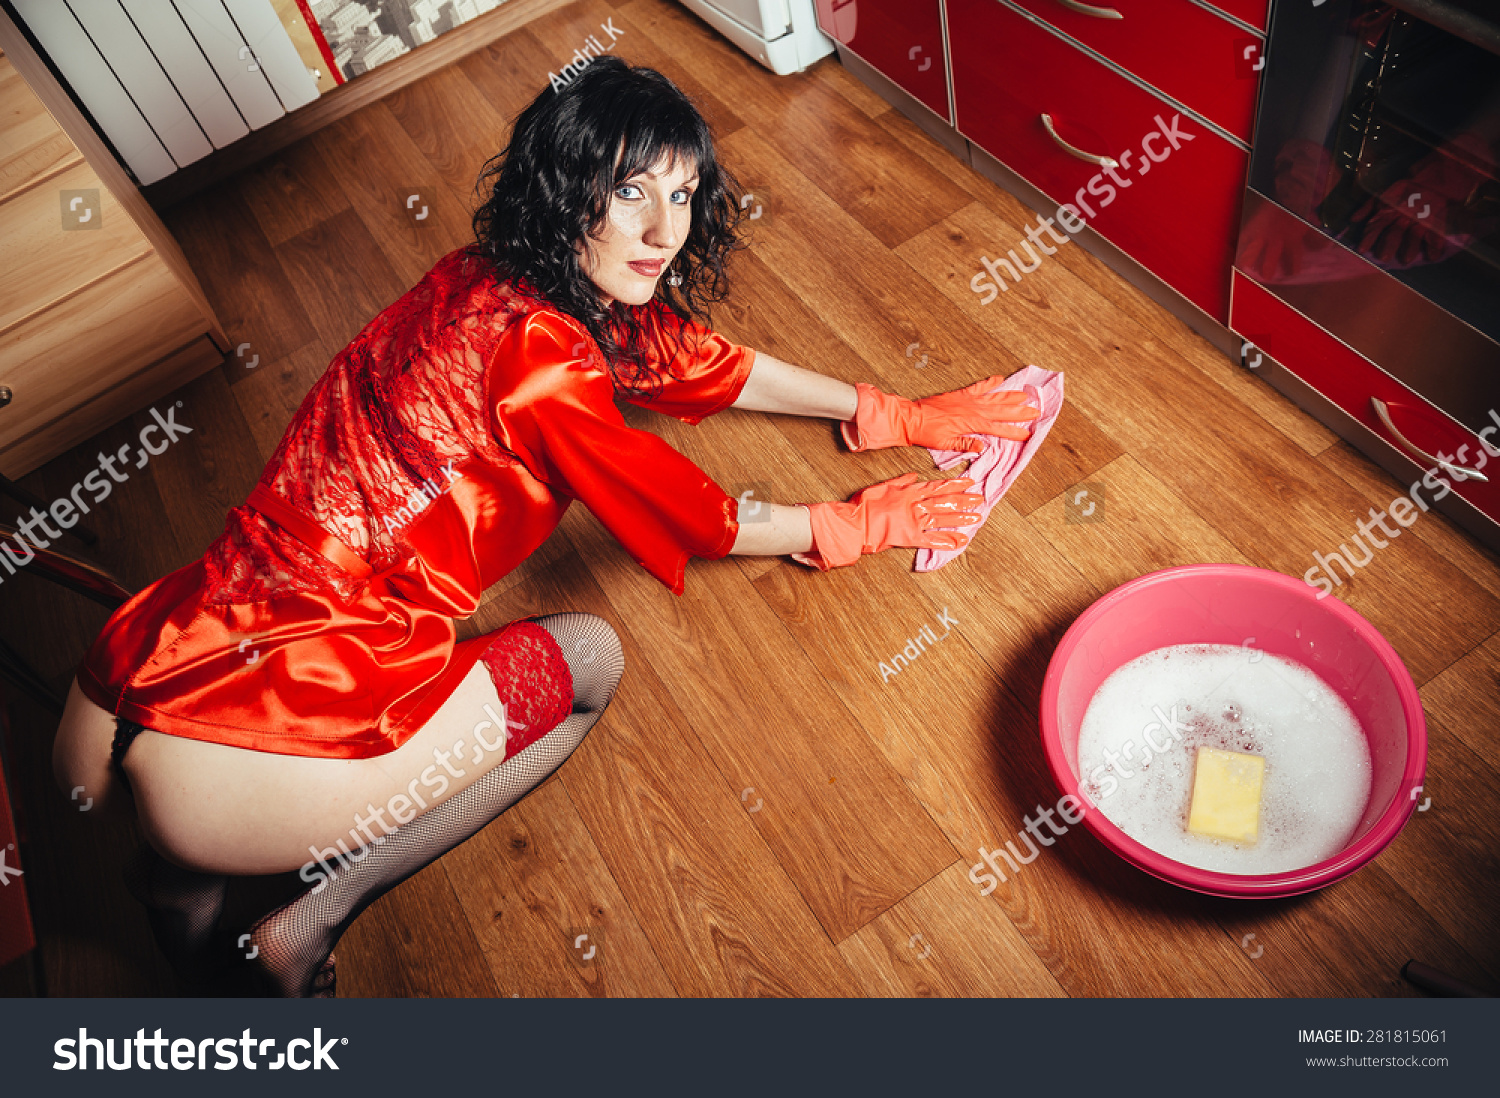 Sexy housewife photos